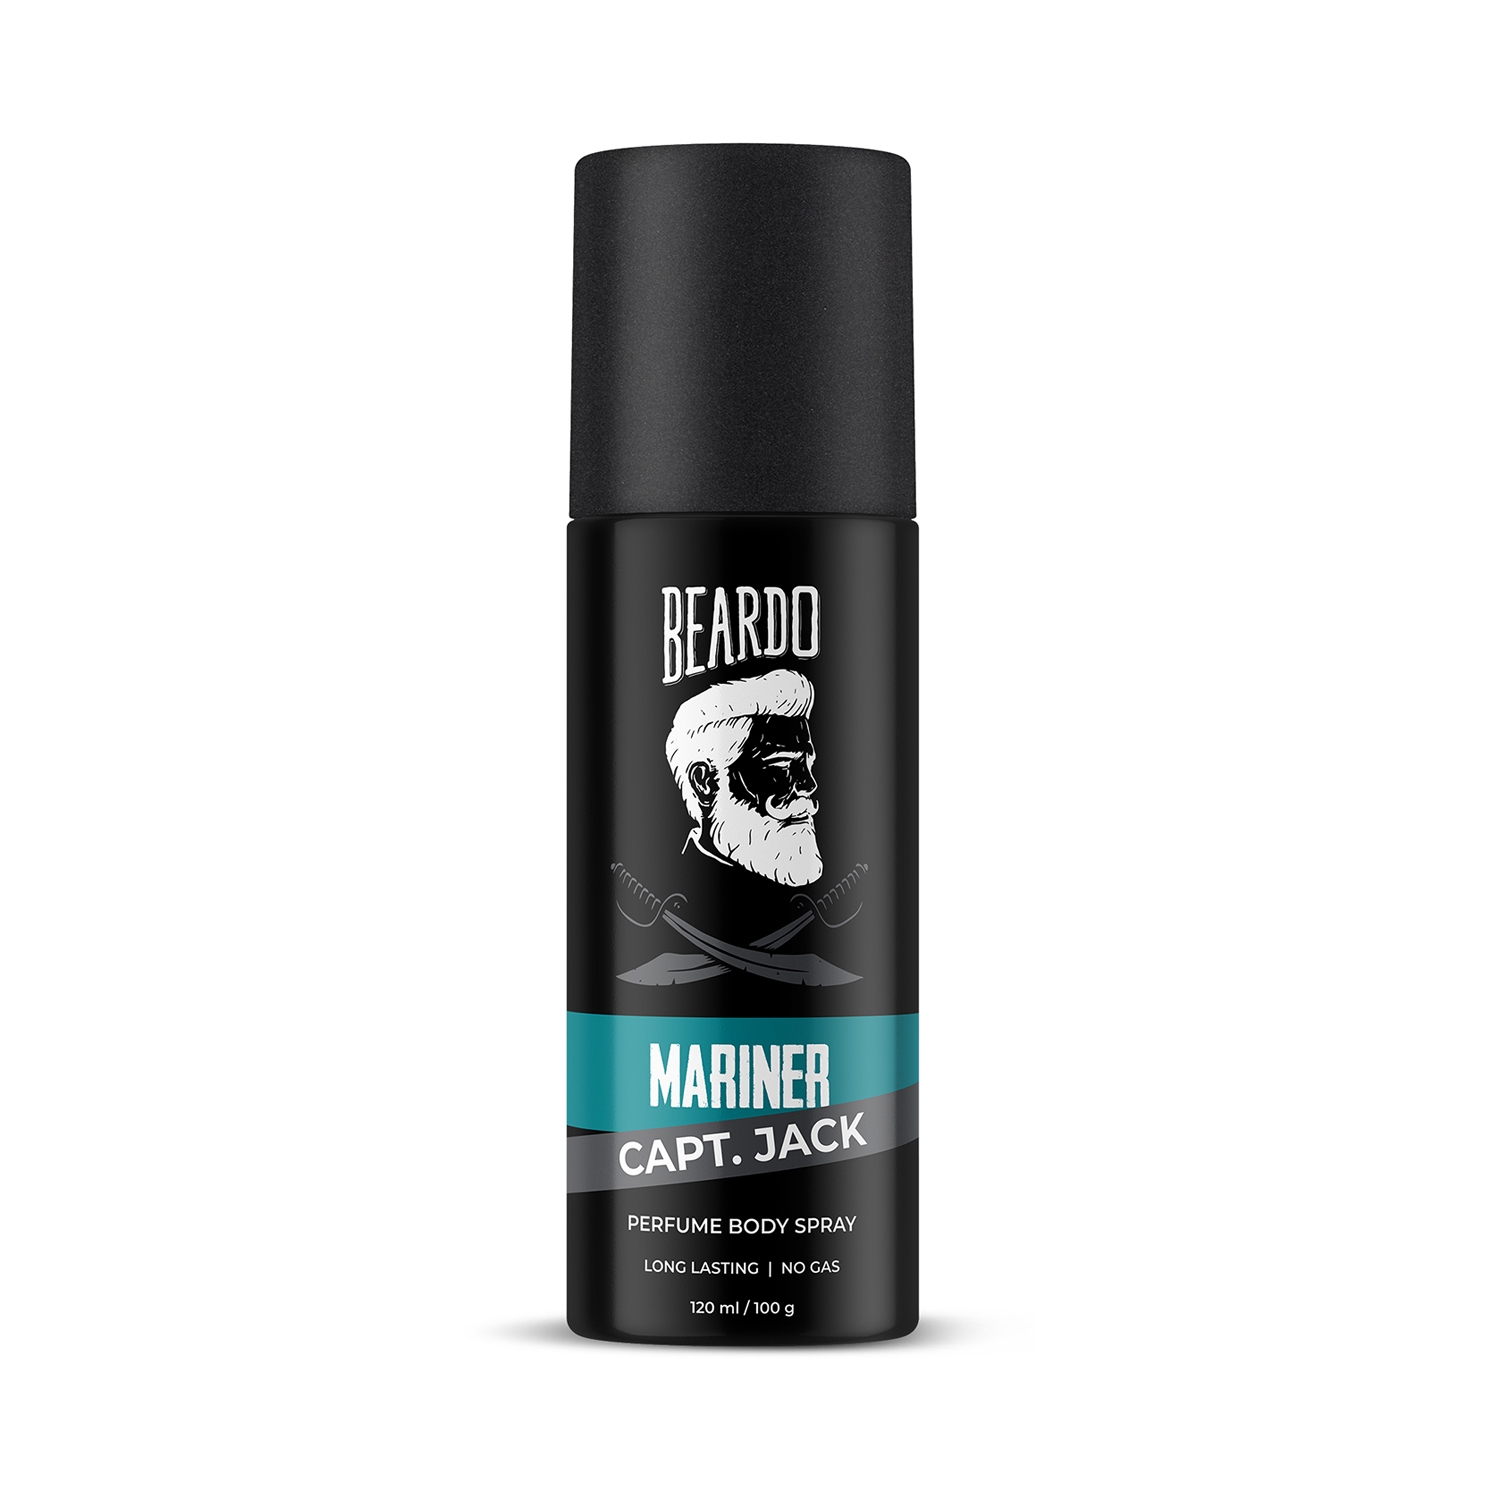 Beardo Mariner Captain Jack Perfume Body Spray (120ml)